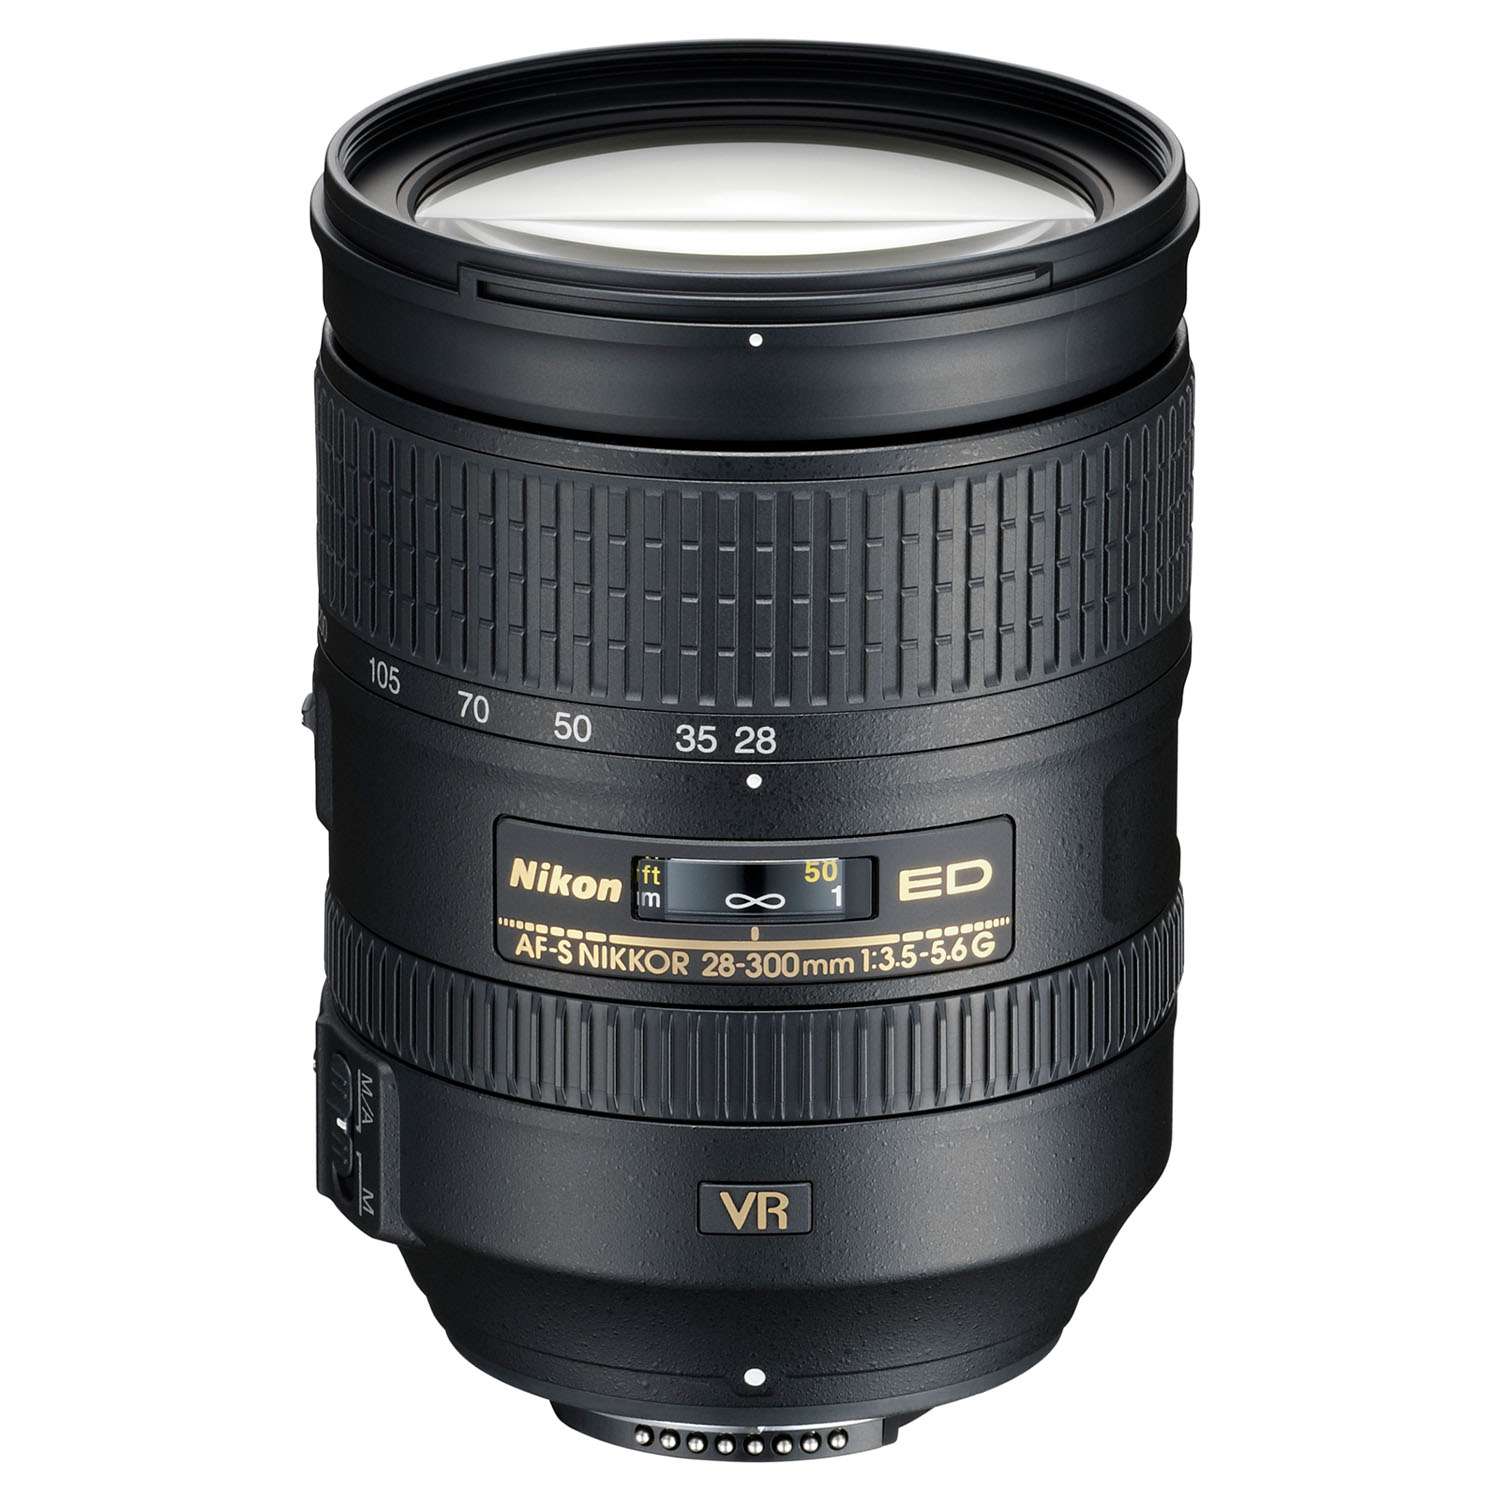 Nikon 28-300mm f3.5-5.6 G VR